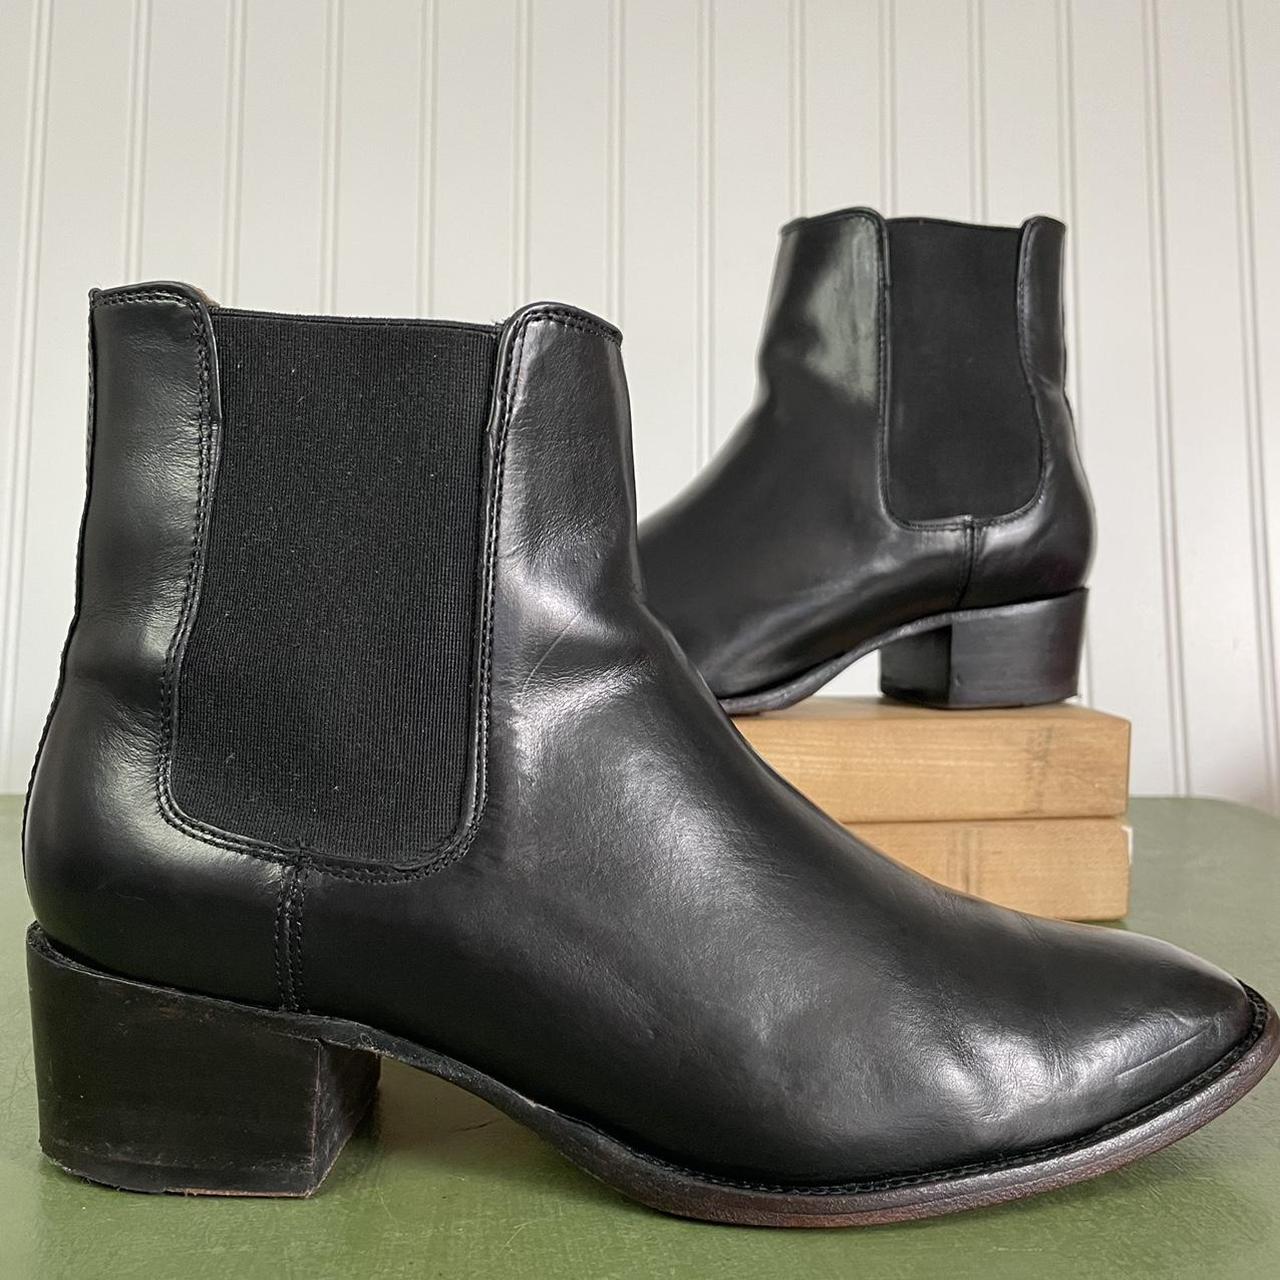 Frye Block Heel Chelsea Boots in Black Smooth... - Depop